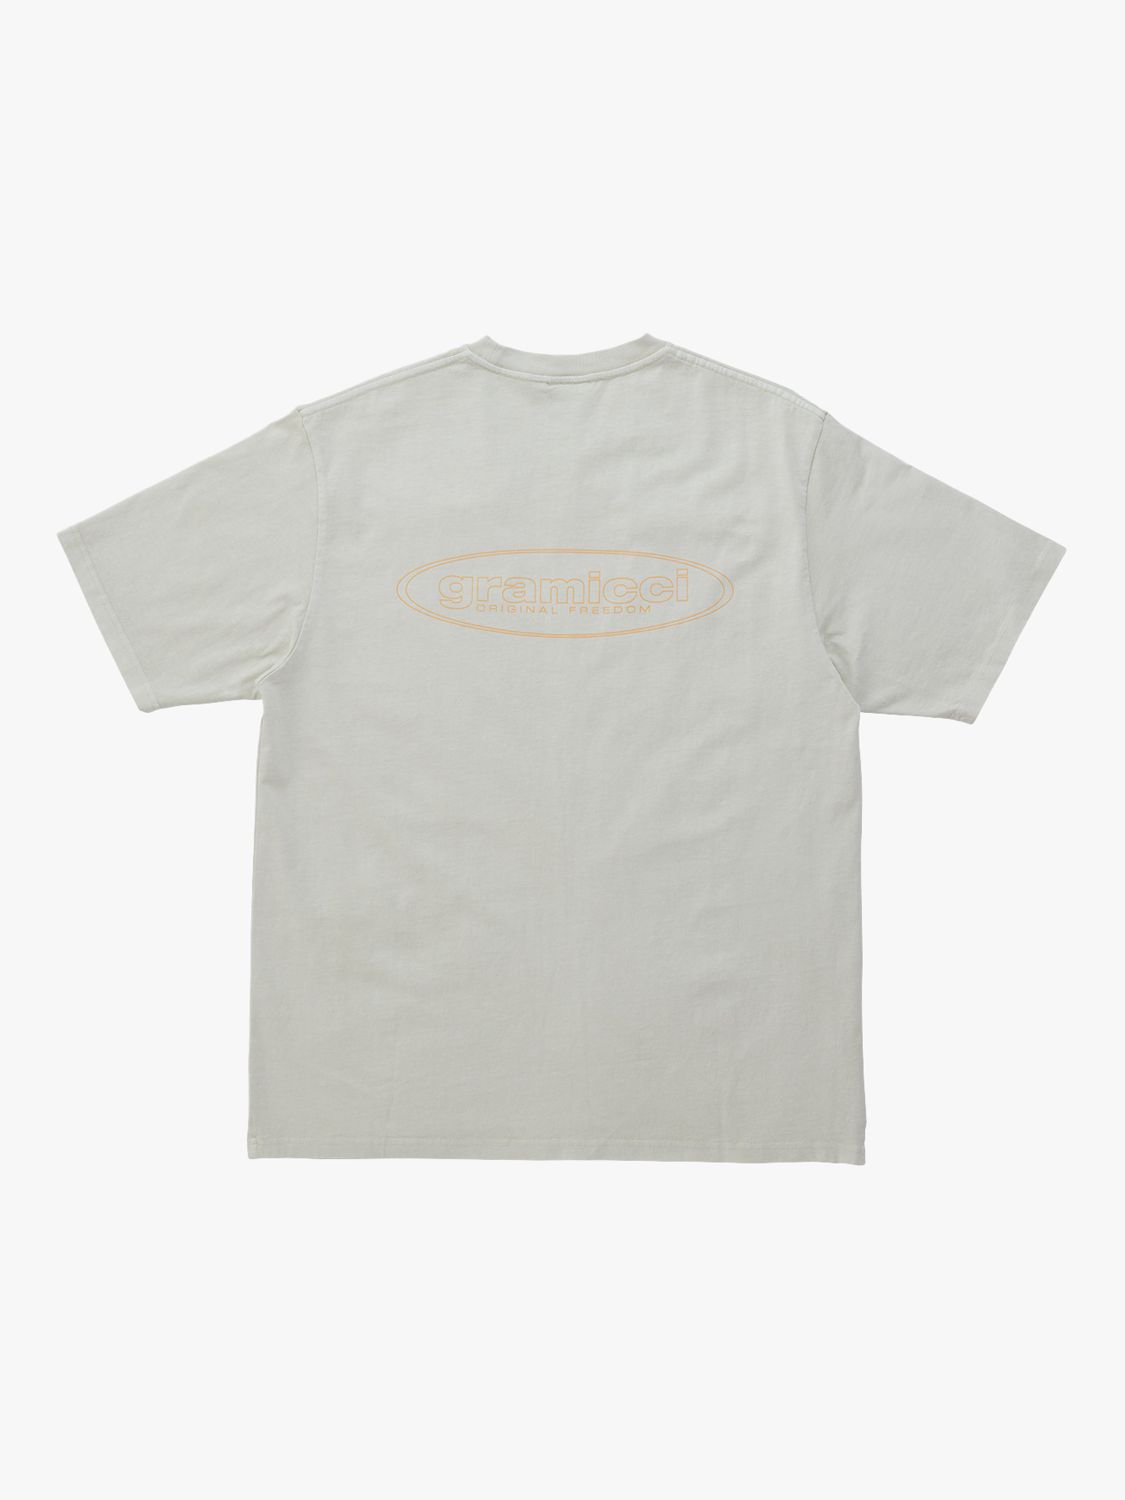 Gramicci Original Freedom T-Shirt, Sand Pigment, L